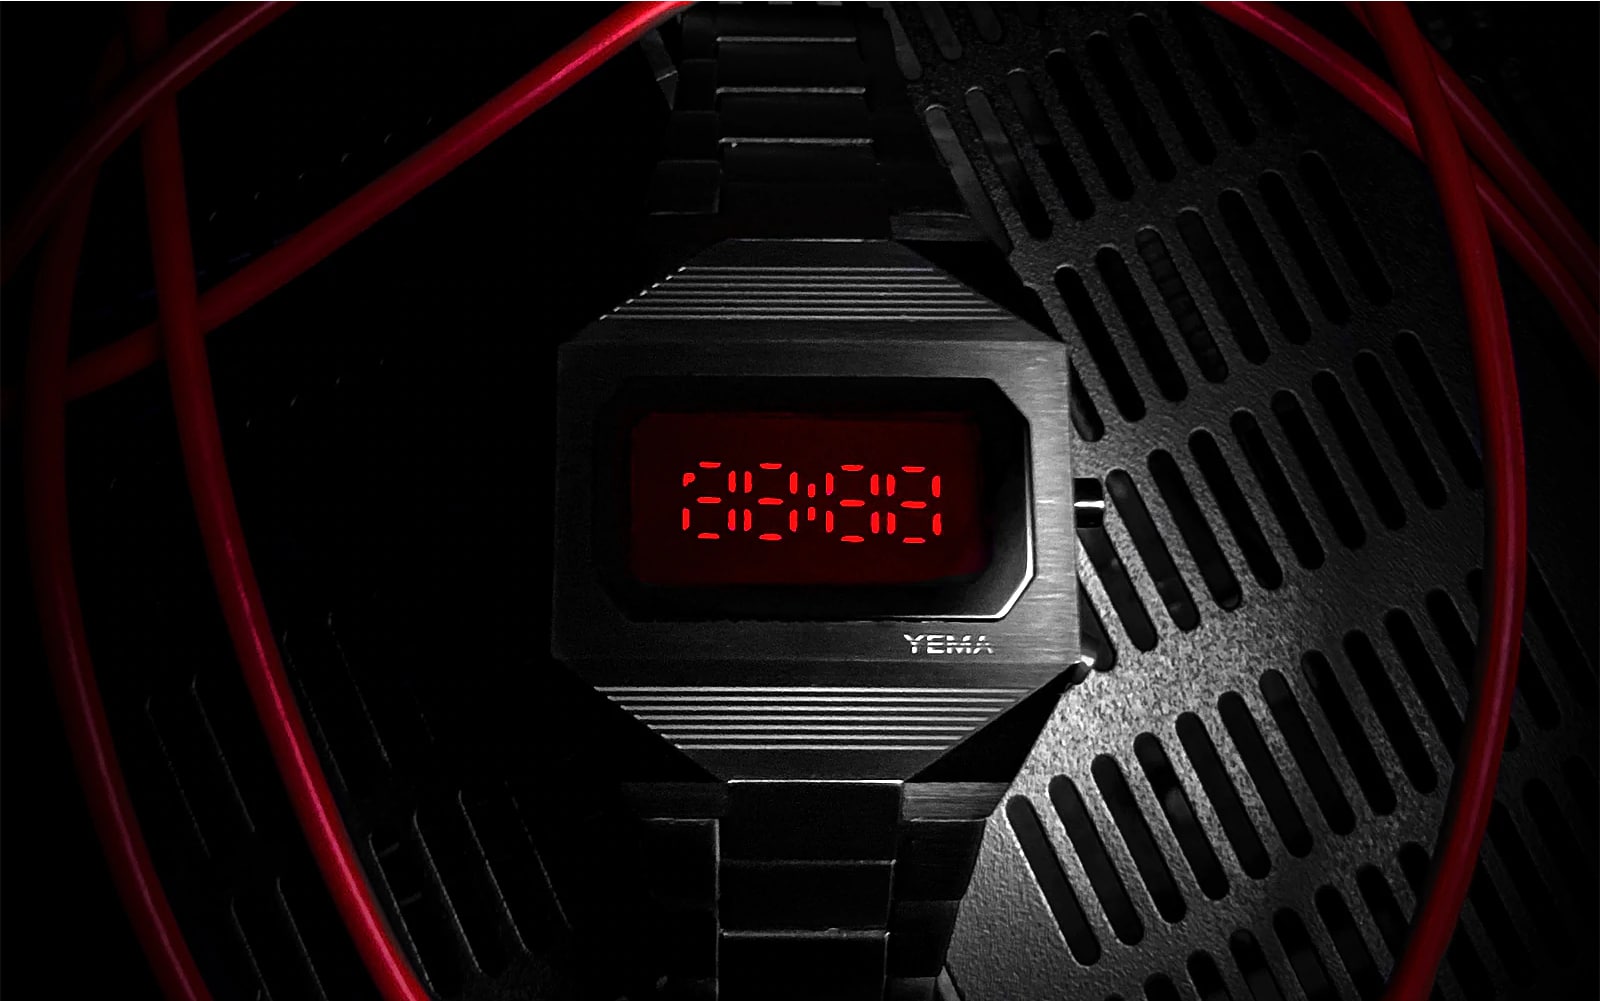 Yema LED Kavinsky Limited Edition Watch